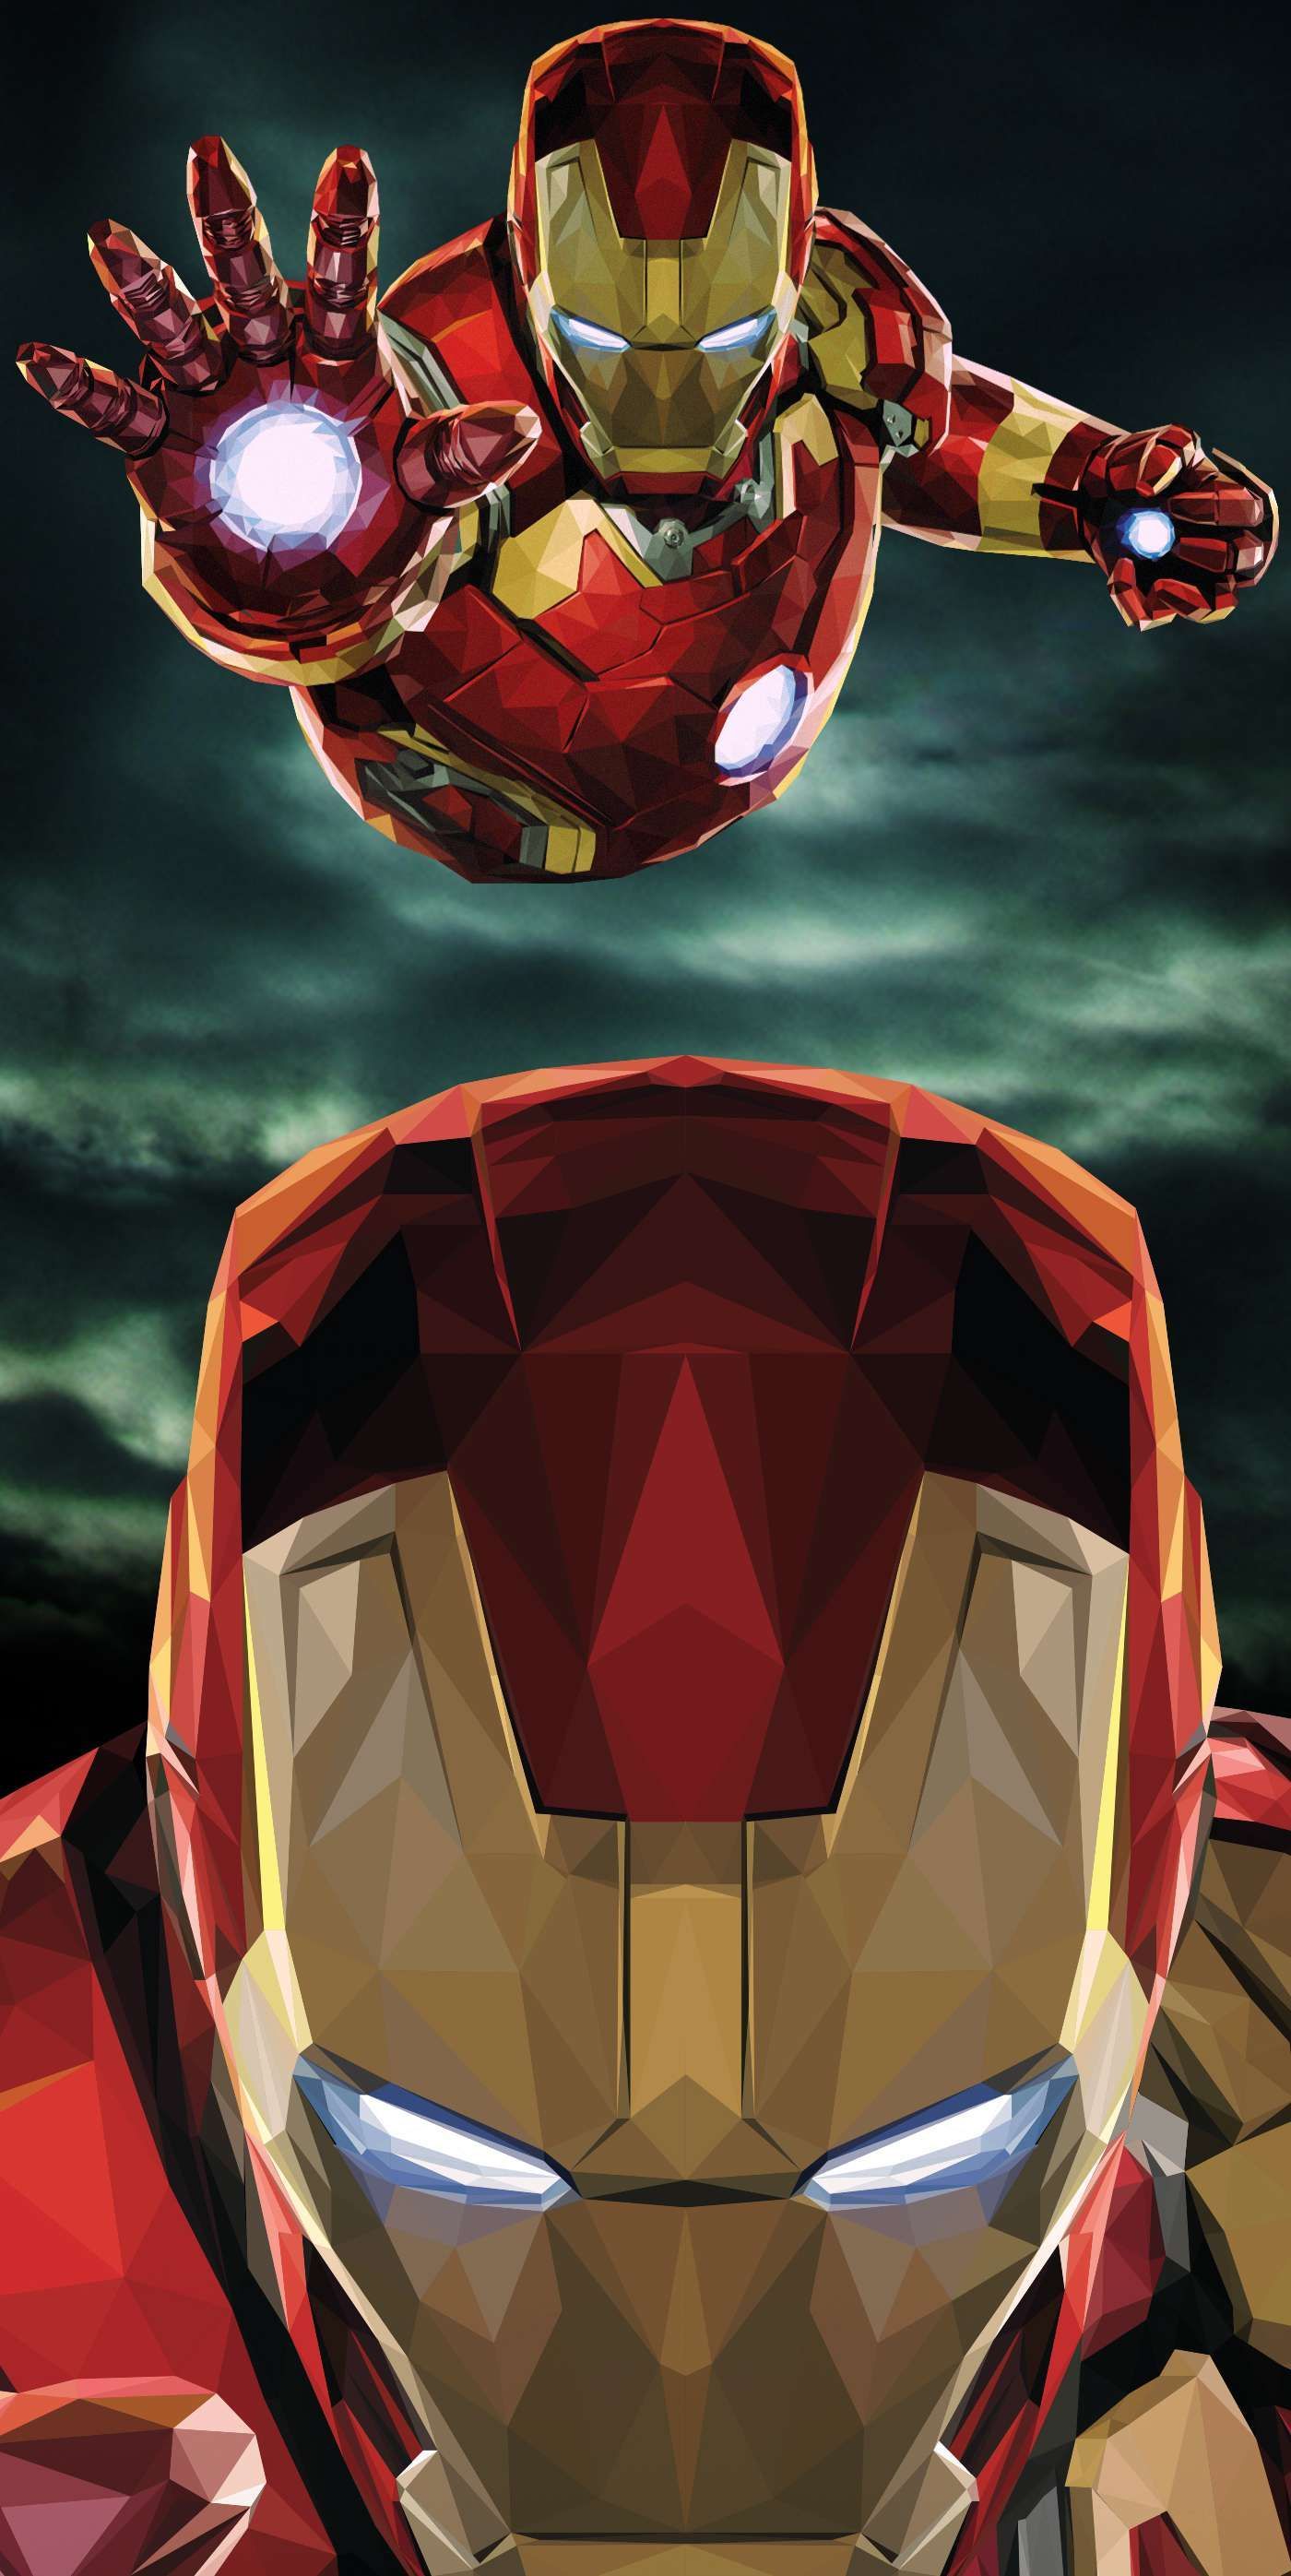 Mark 45 Iron Man Armor Wallpaper. Best iphone wallpaper, Android wallpaper, iPhone wallpaper